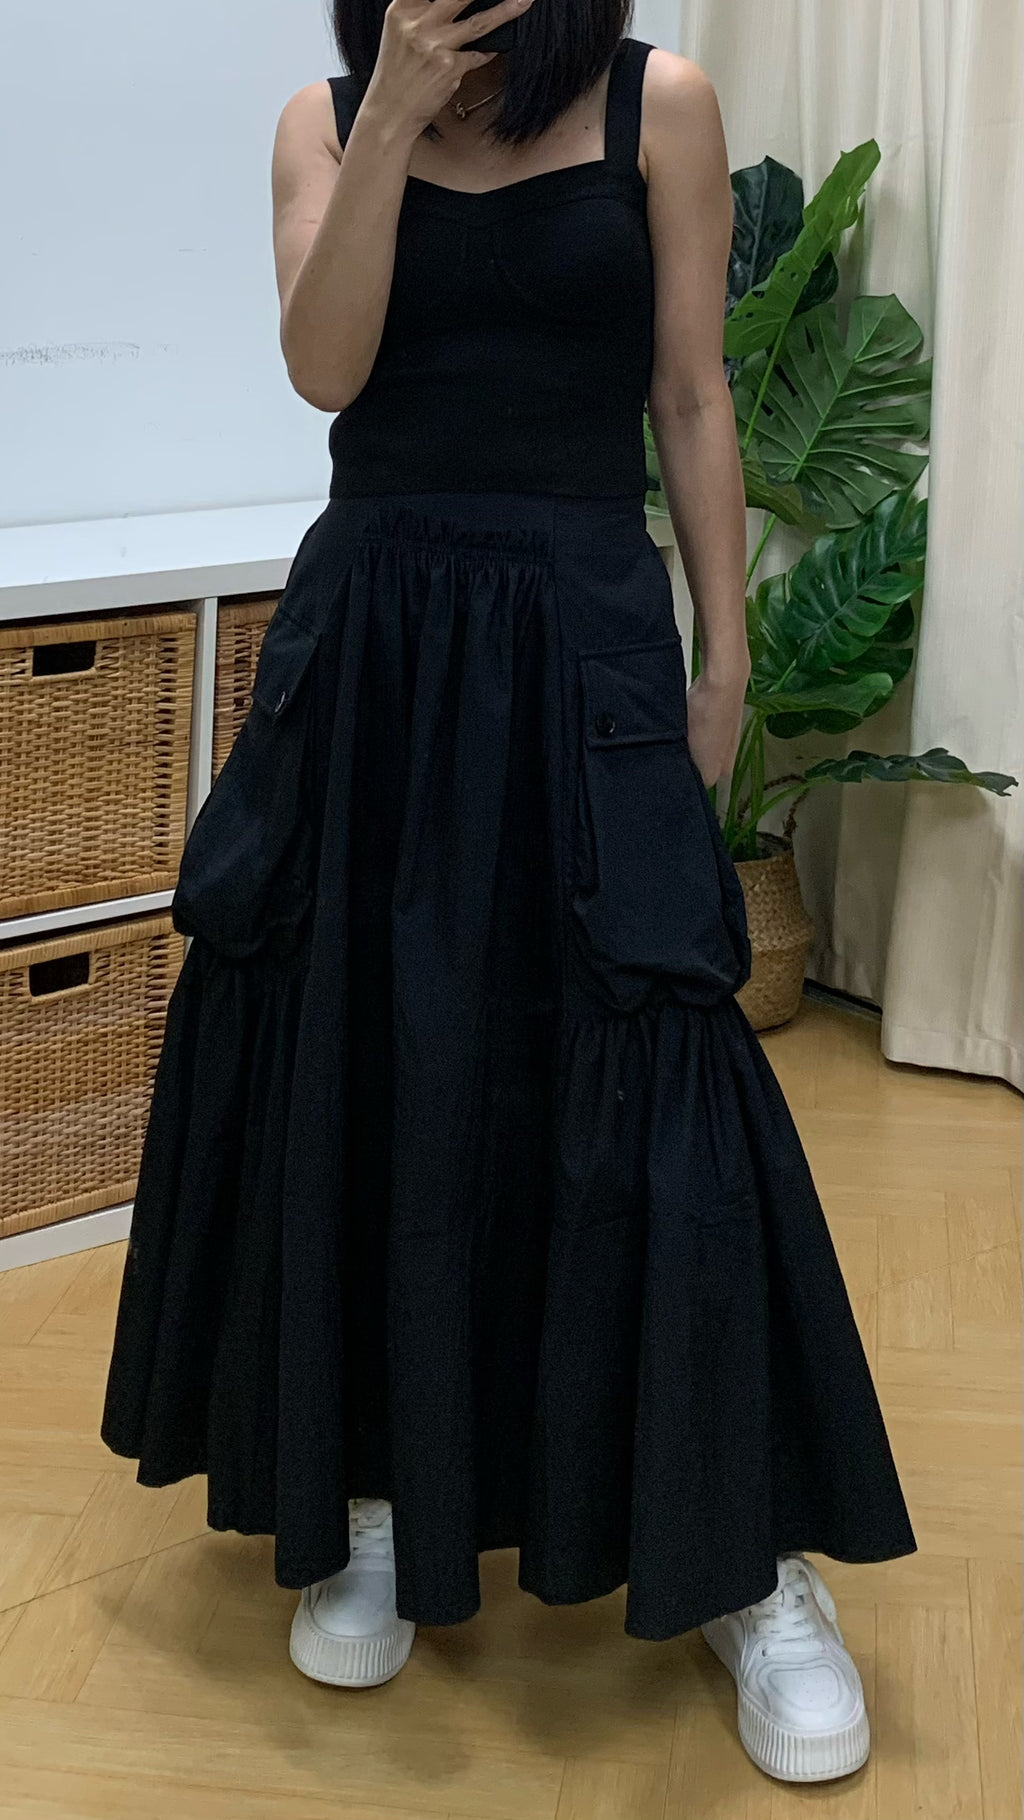 Textured Fabric Big Pocket Skirt (Black) [Ref : 24698960]